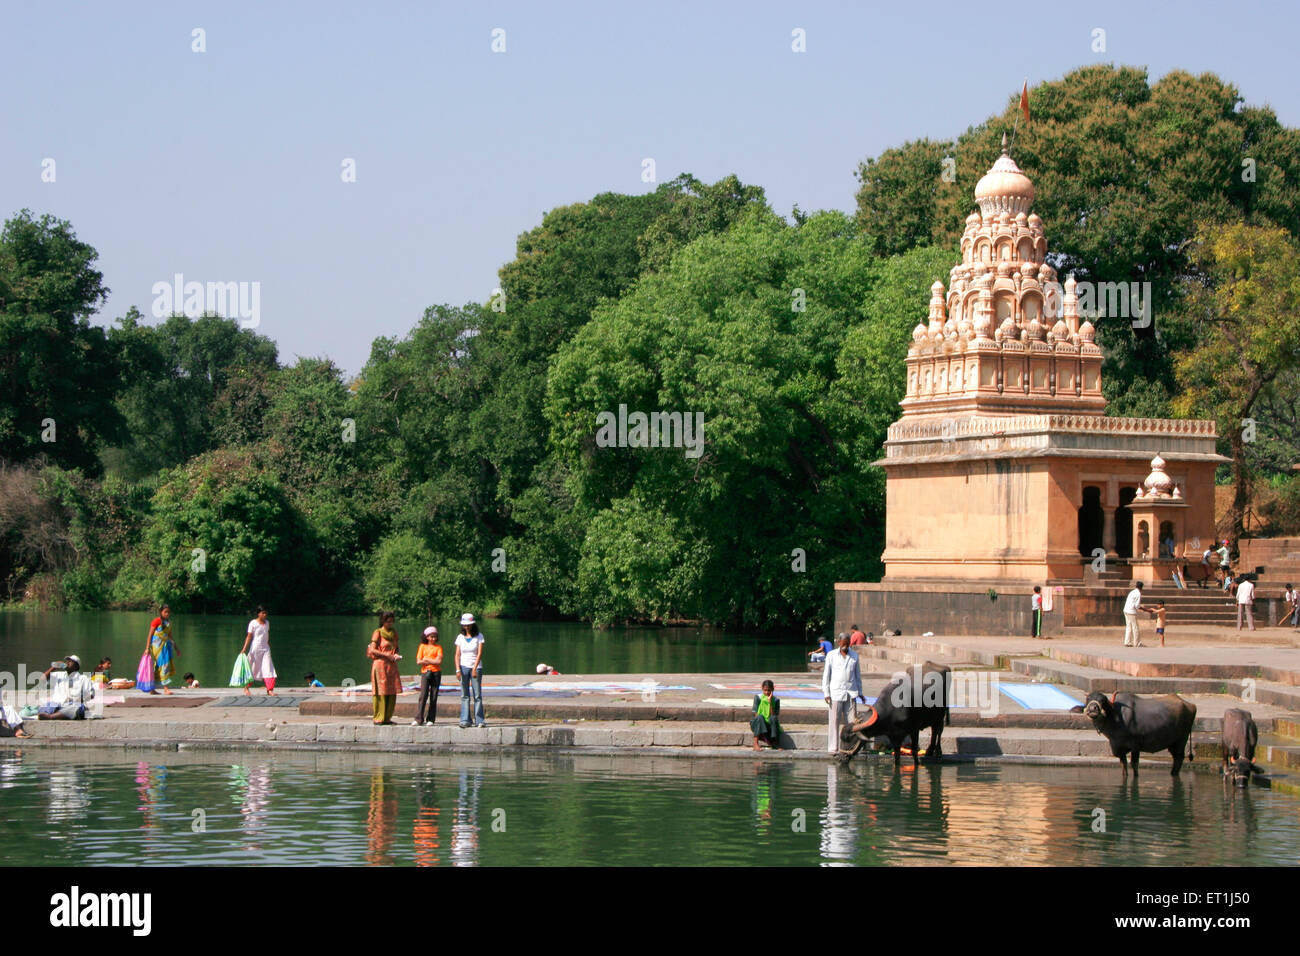 Tempel, Lord Shiva am Ufer des Flusses Krishna gewidmet; Menauli; Wai; Maharashtra; Indien Stockfoto